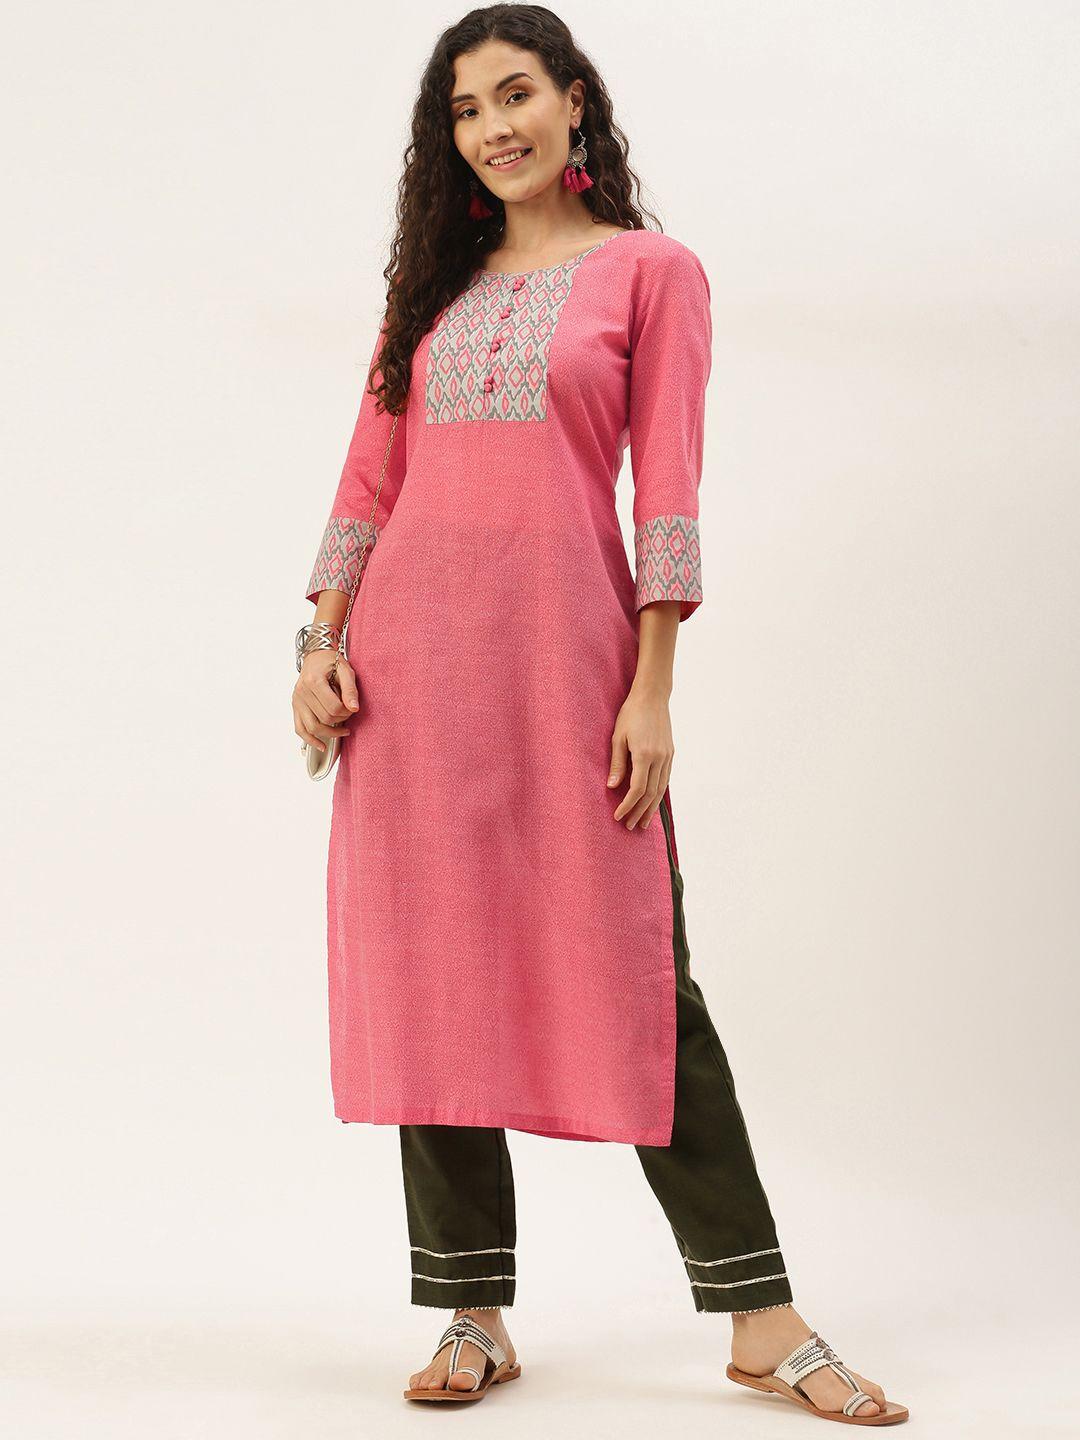 shewill women pink & grey ethnic motifs printed kurta